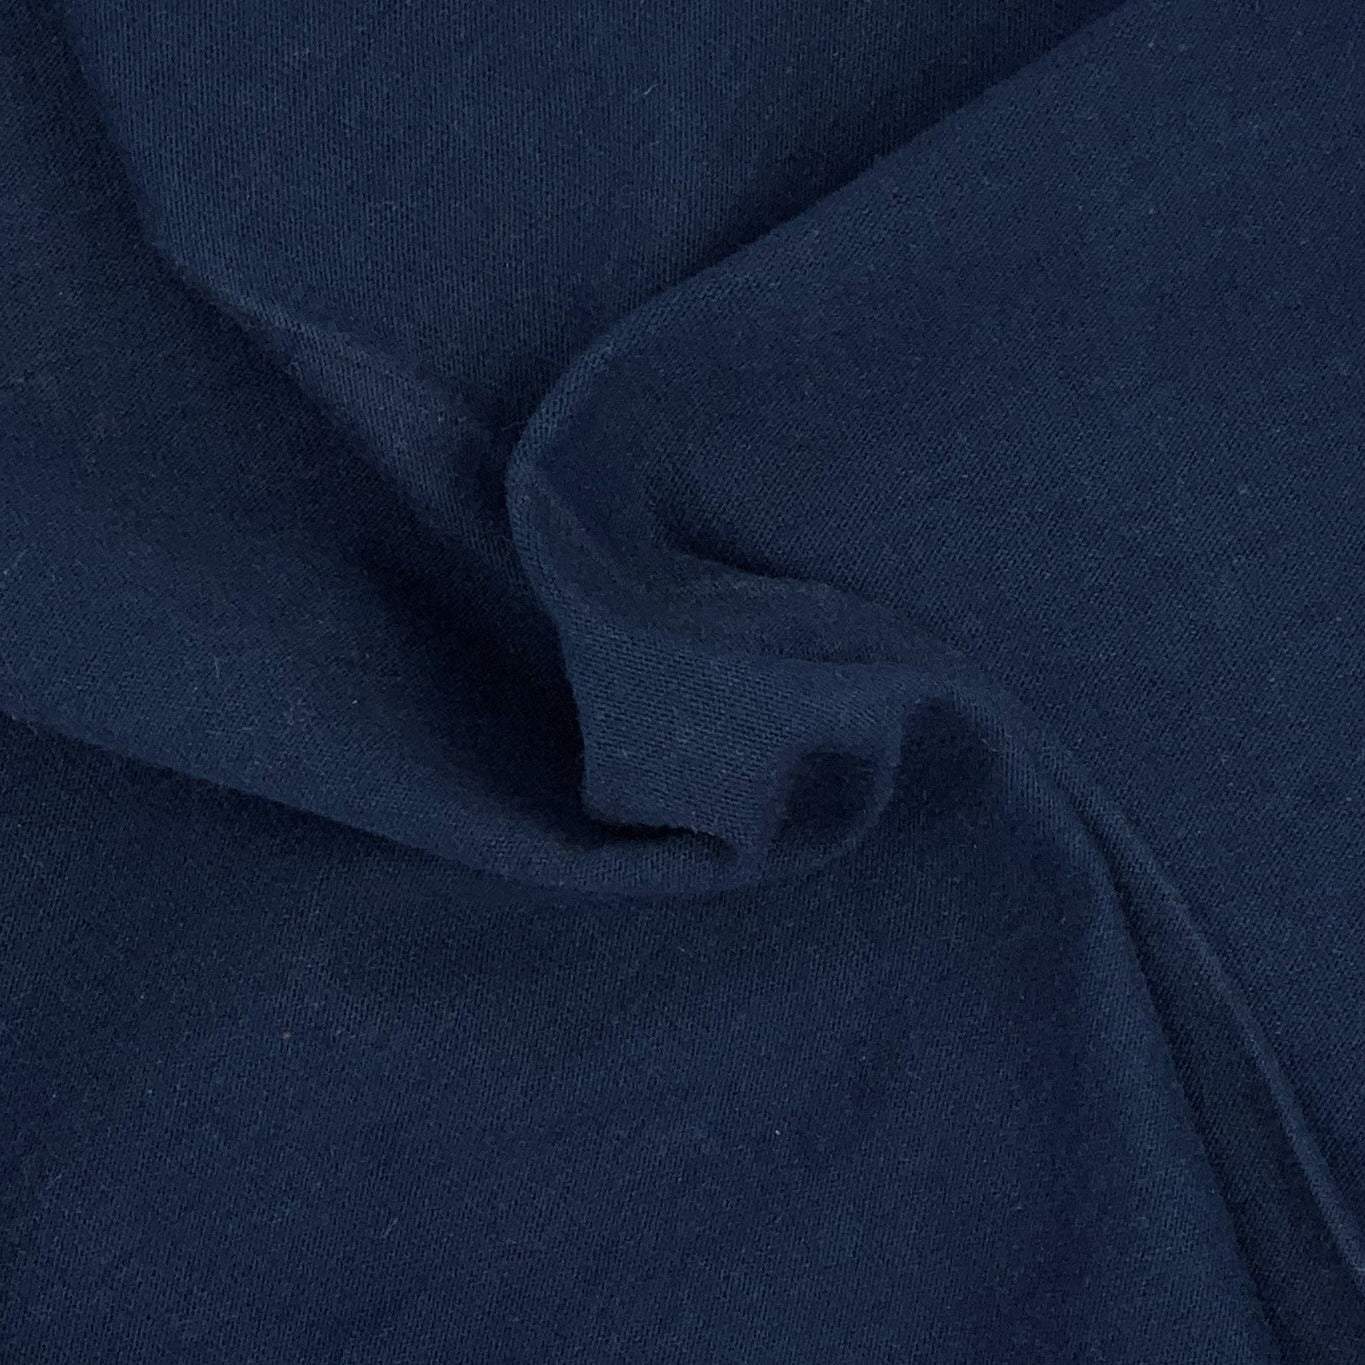 Navy #S/KK Cotton 12 Ounce Tubular Jersey Knit Fabric - SKU 6933A